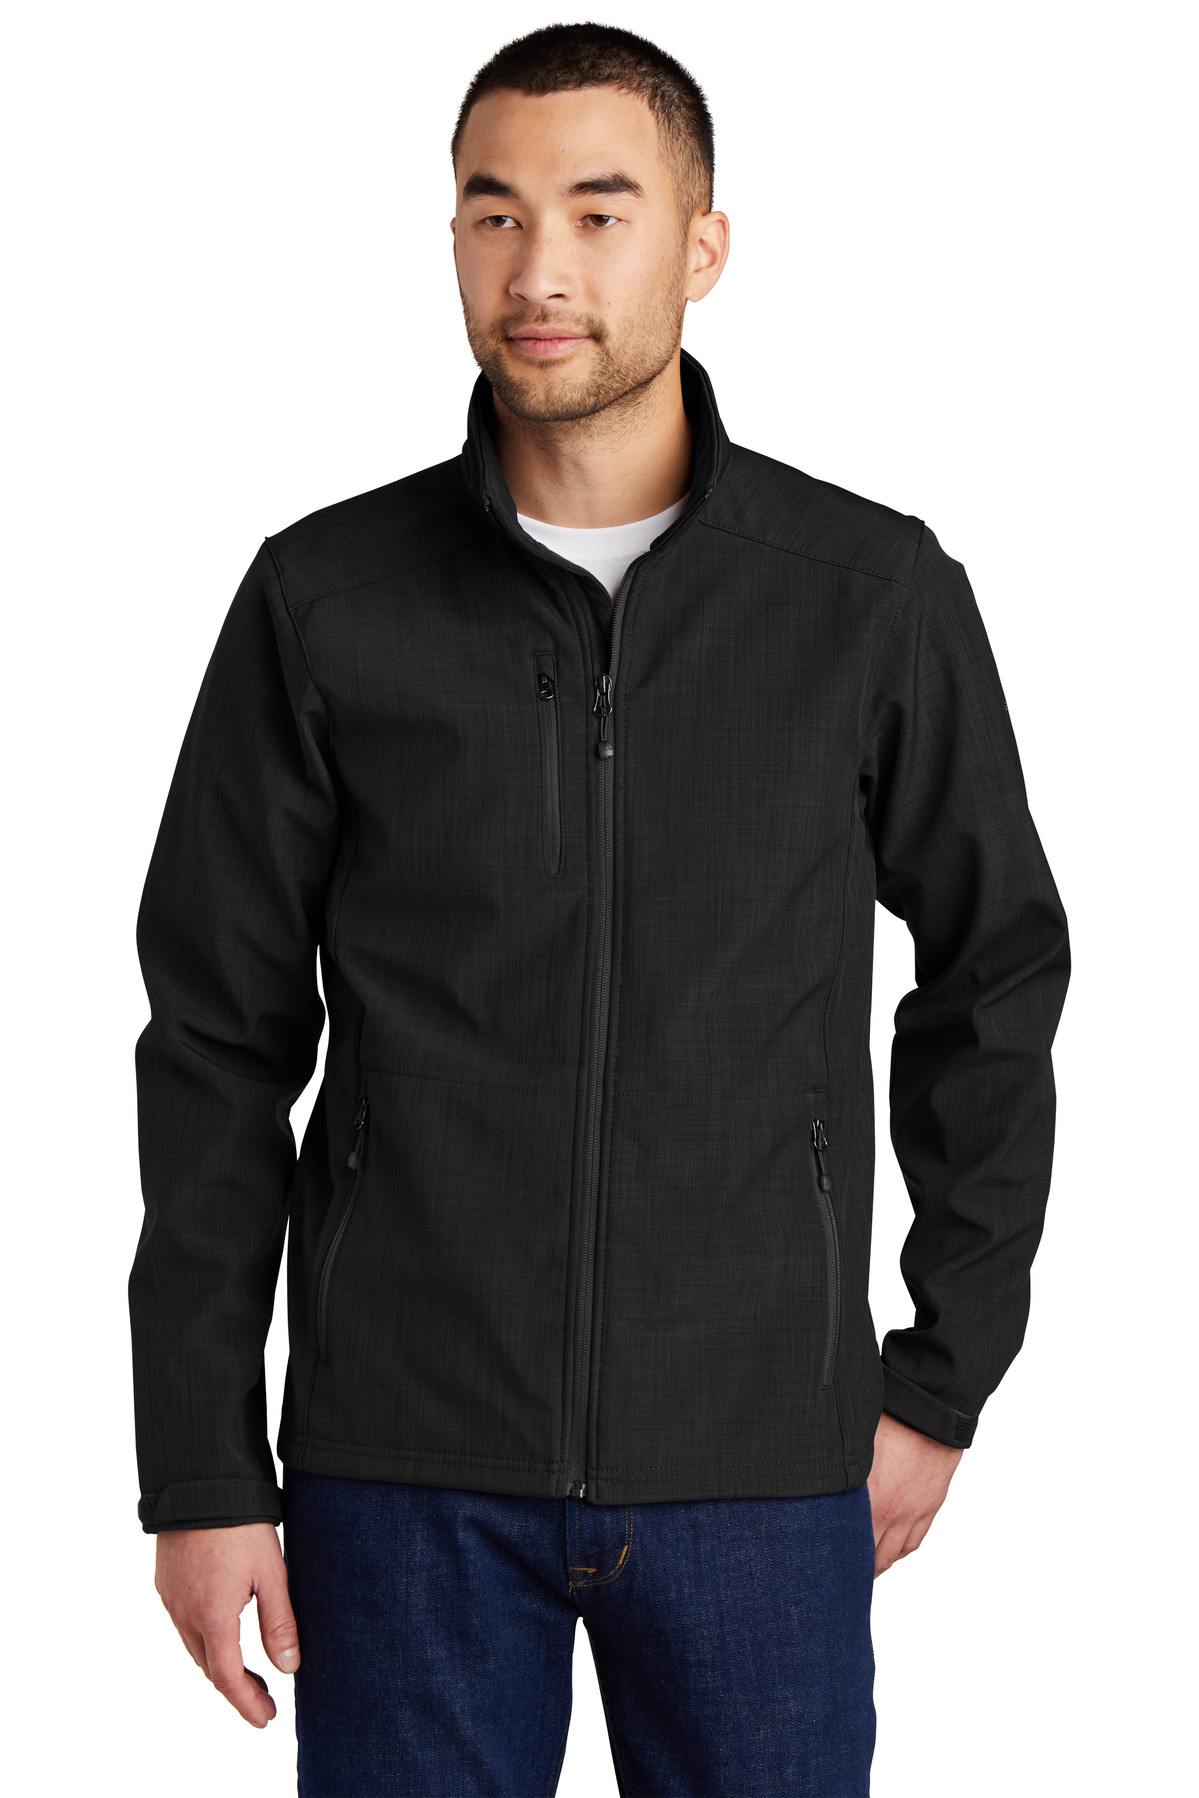 Eddie Bauer Hospitality Outerwear ® Shaded Crosshatch Soft Shell Jacket.-Eddie Bauer